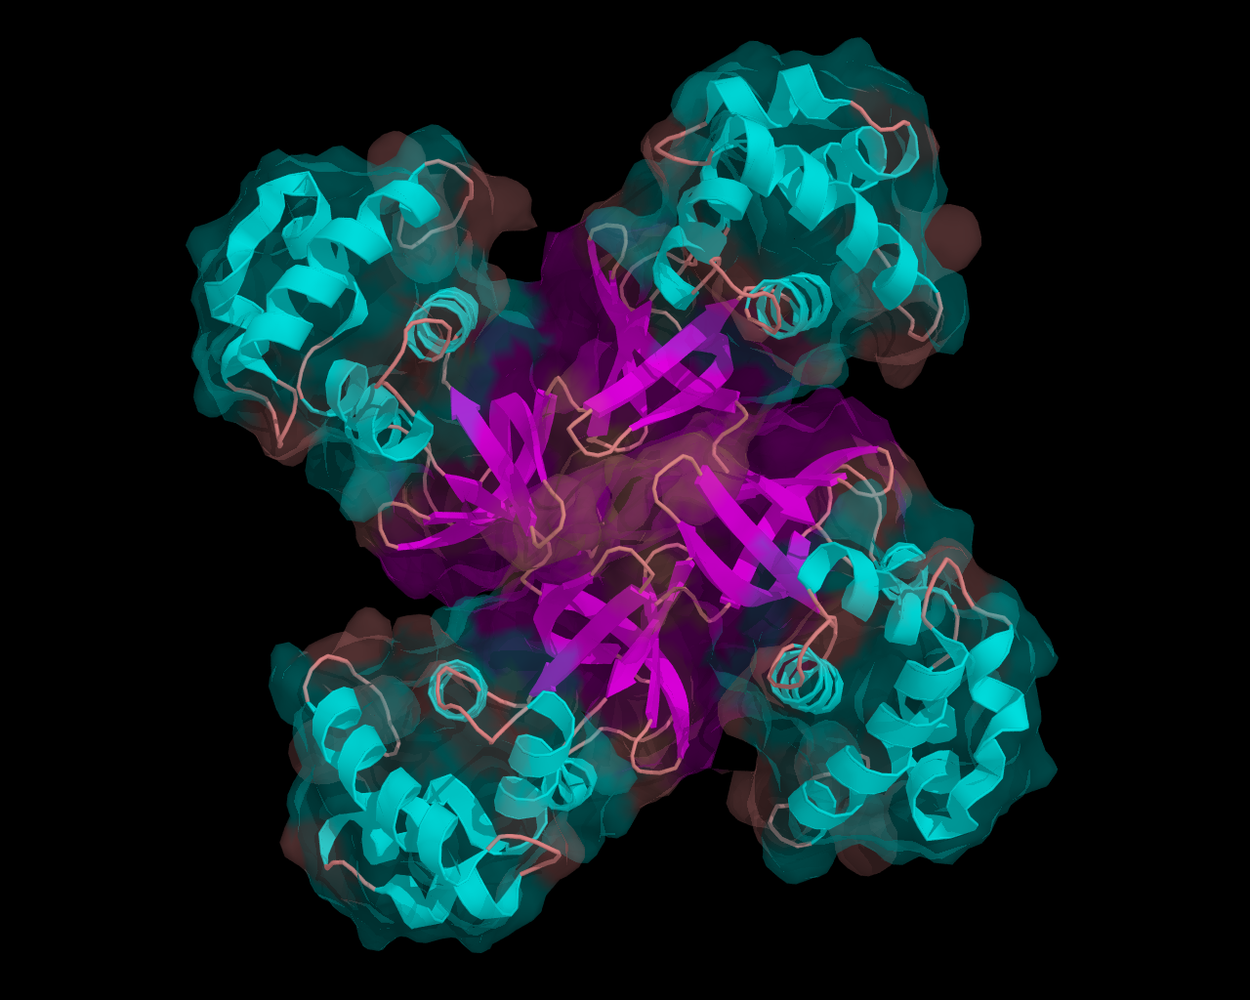 A DNA helicase (Ruva protein) from a bacterium, Escherichia coli